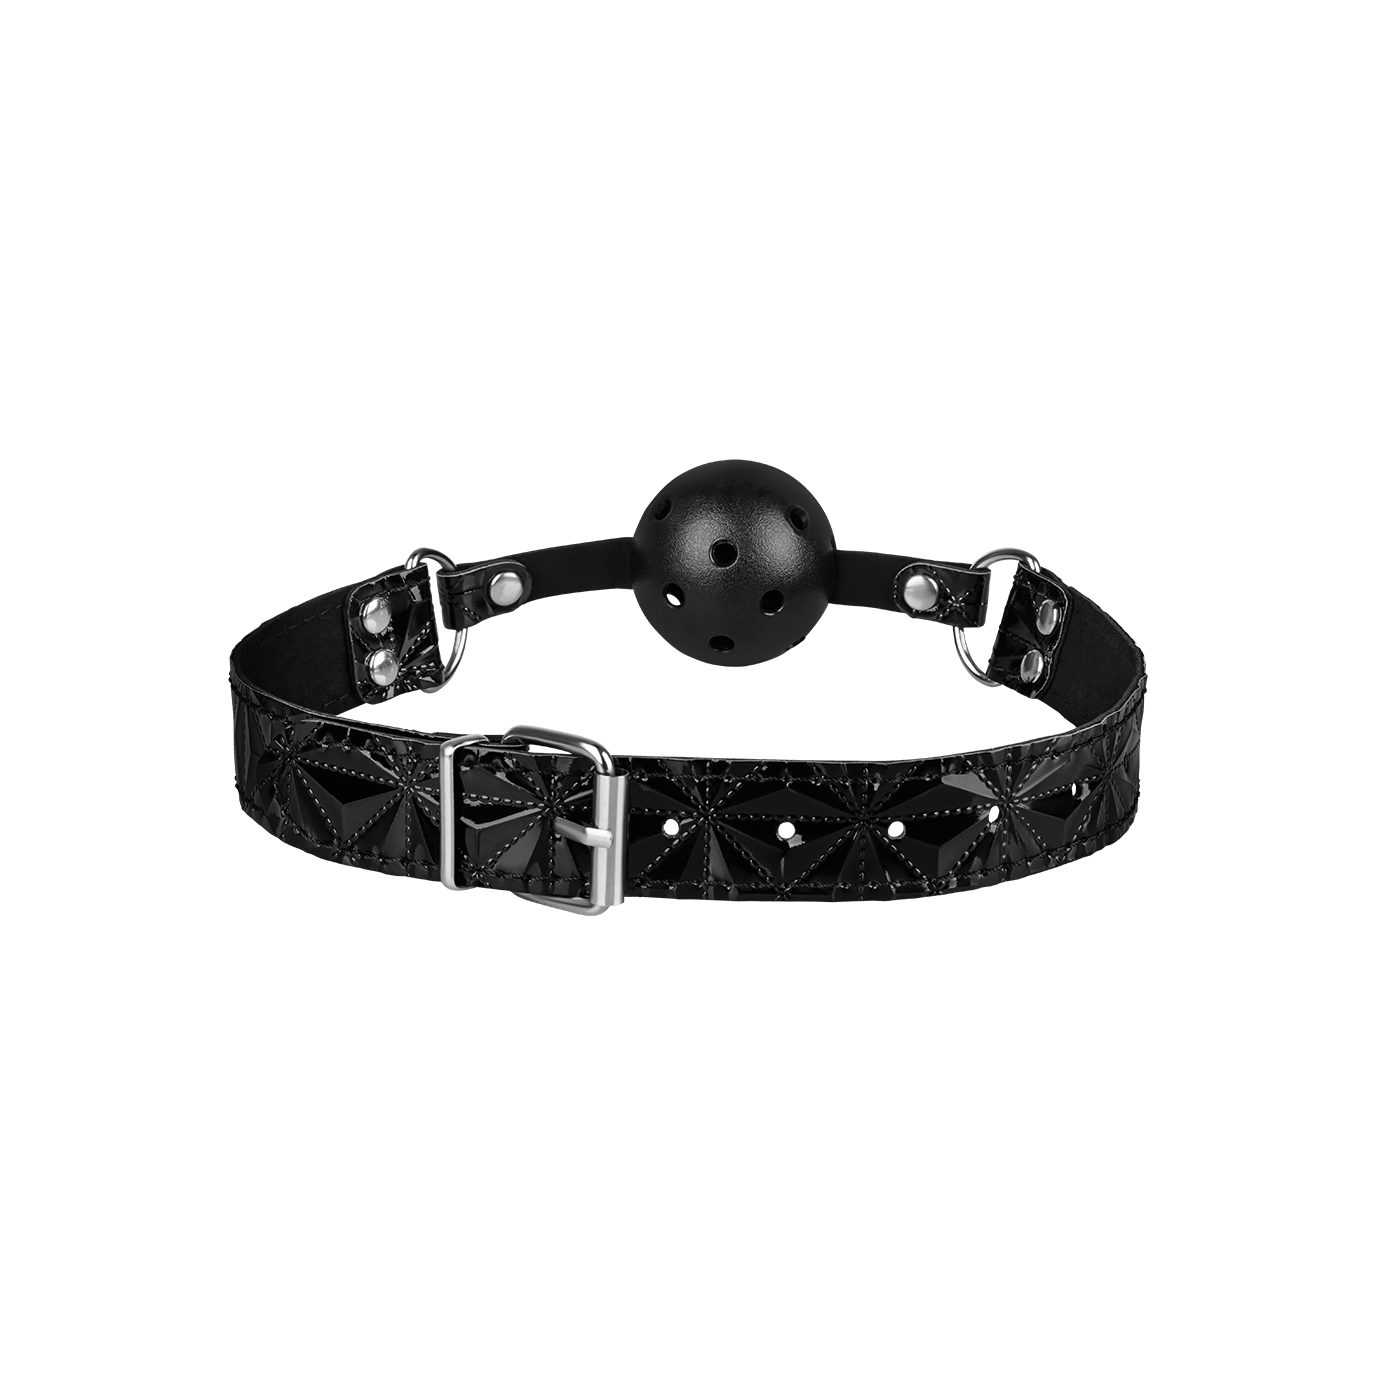 EIS Handfesseln EIS Ball-Knebel, 4.4cm, größenverstellbar atmungsaktiv, BDSM